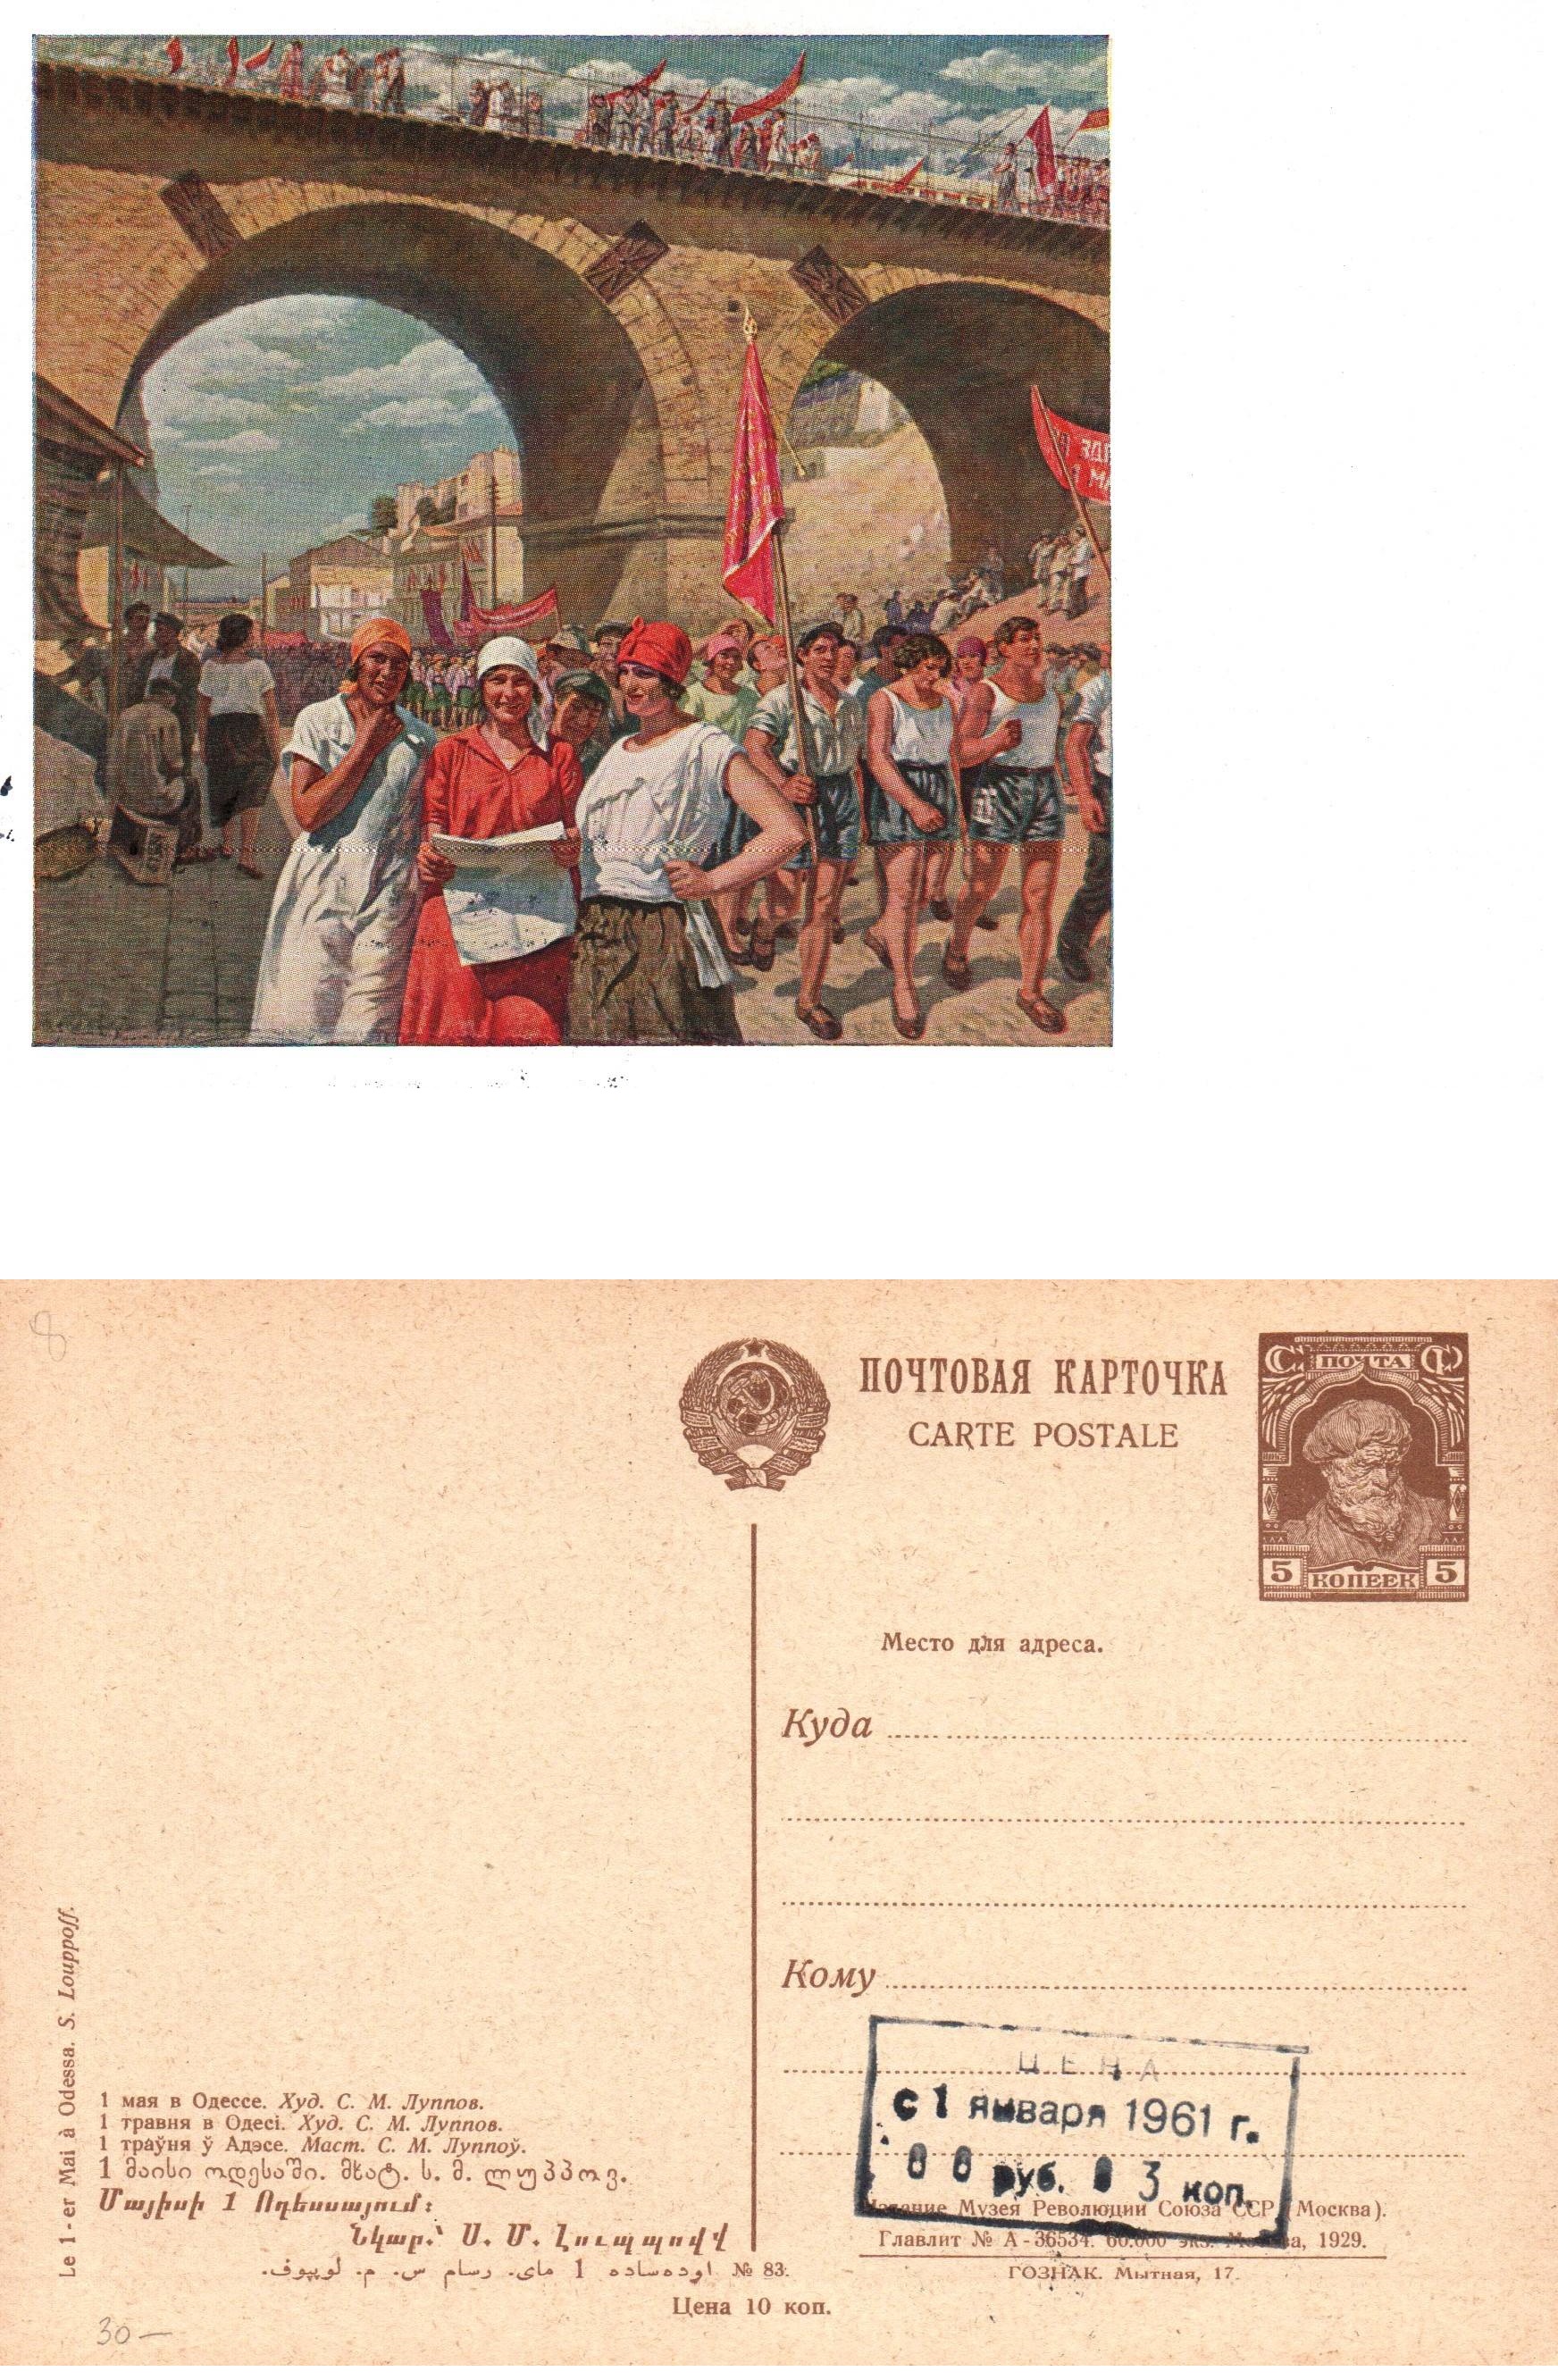 Postal Stationery - Soviet Union Scott 2283a Michel P61.83 